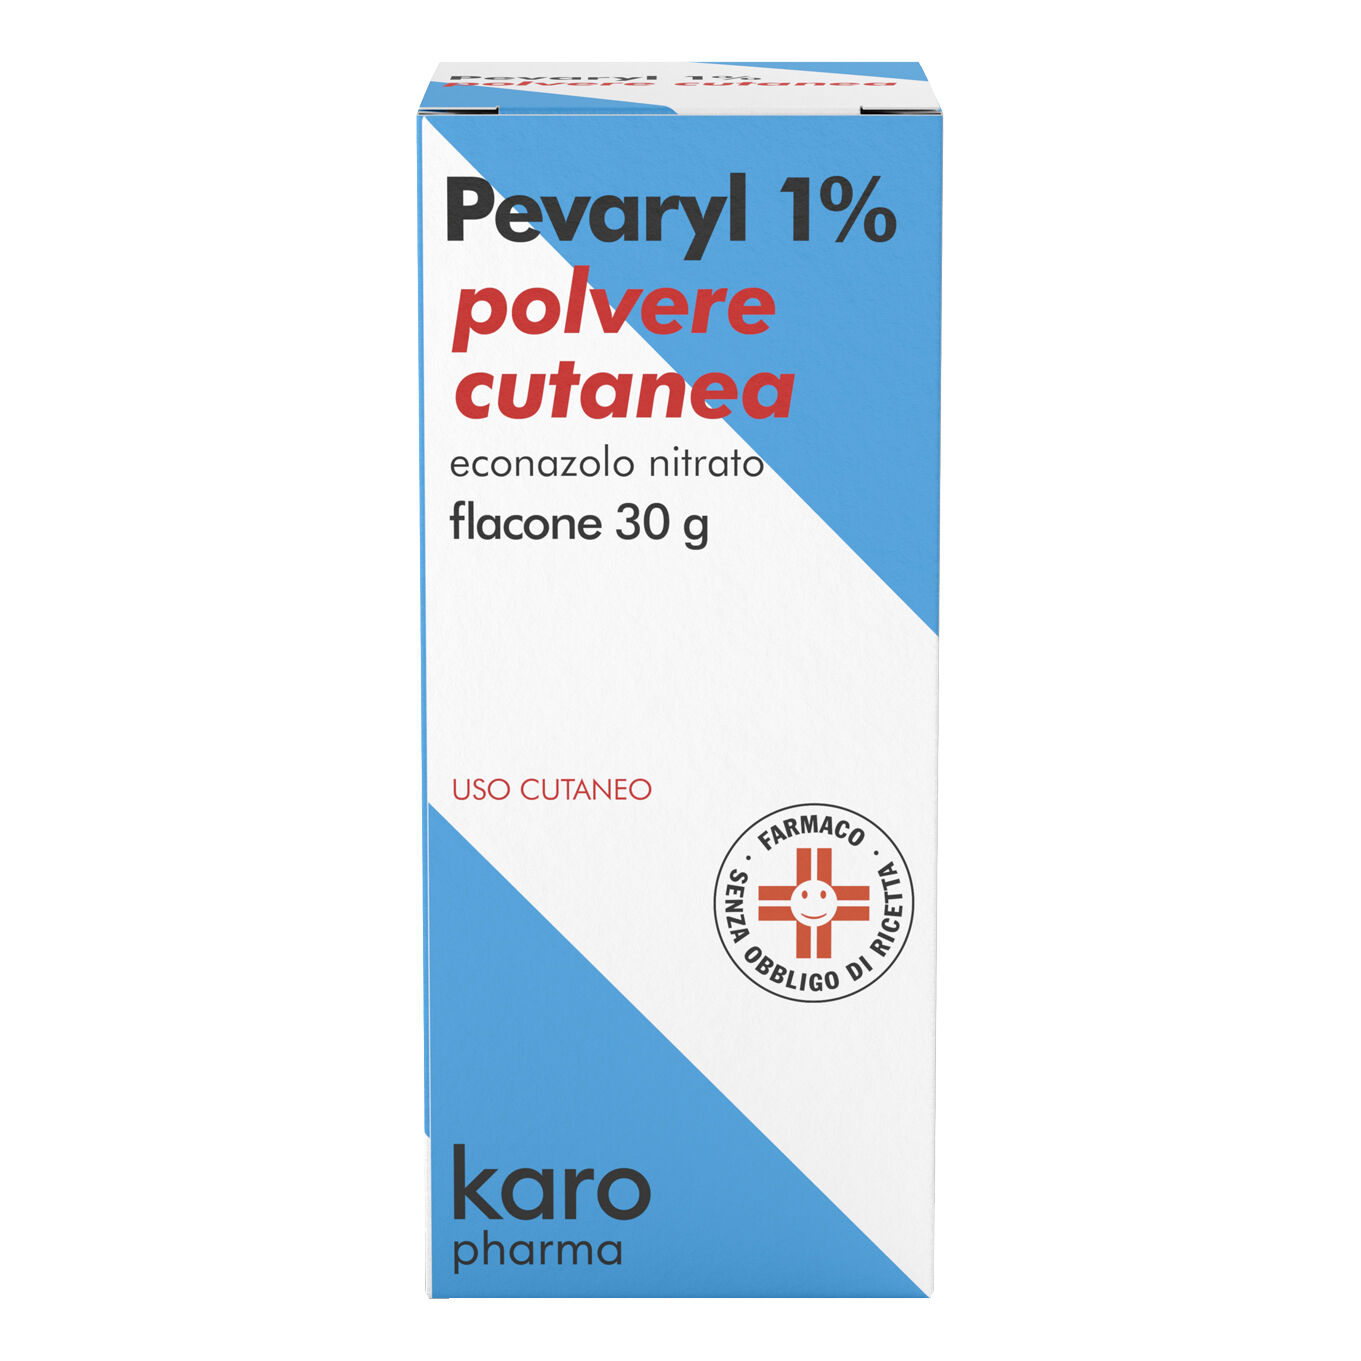 Karo Pharma Srl Pevaryl Polvere Cutanea 30 Grammi 1%